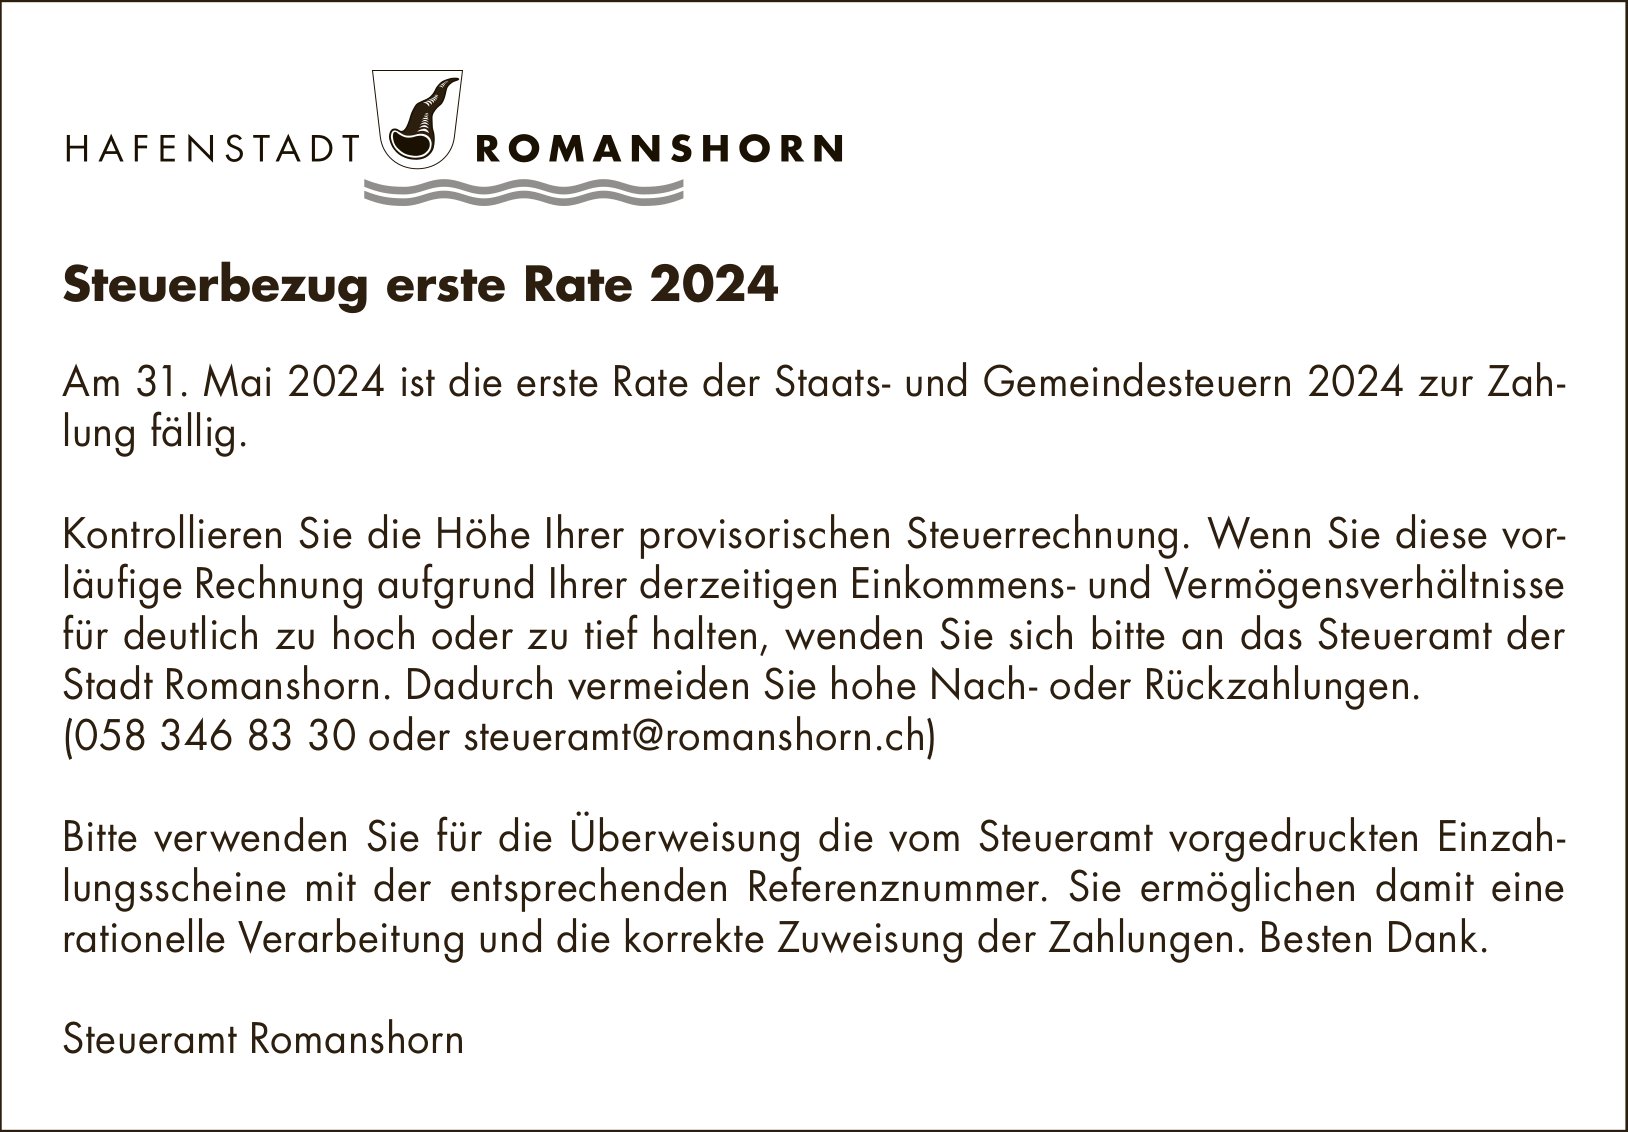 Romanshorn - Steuerbezug Erste Rate 2024